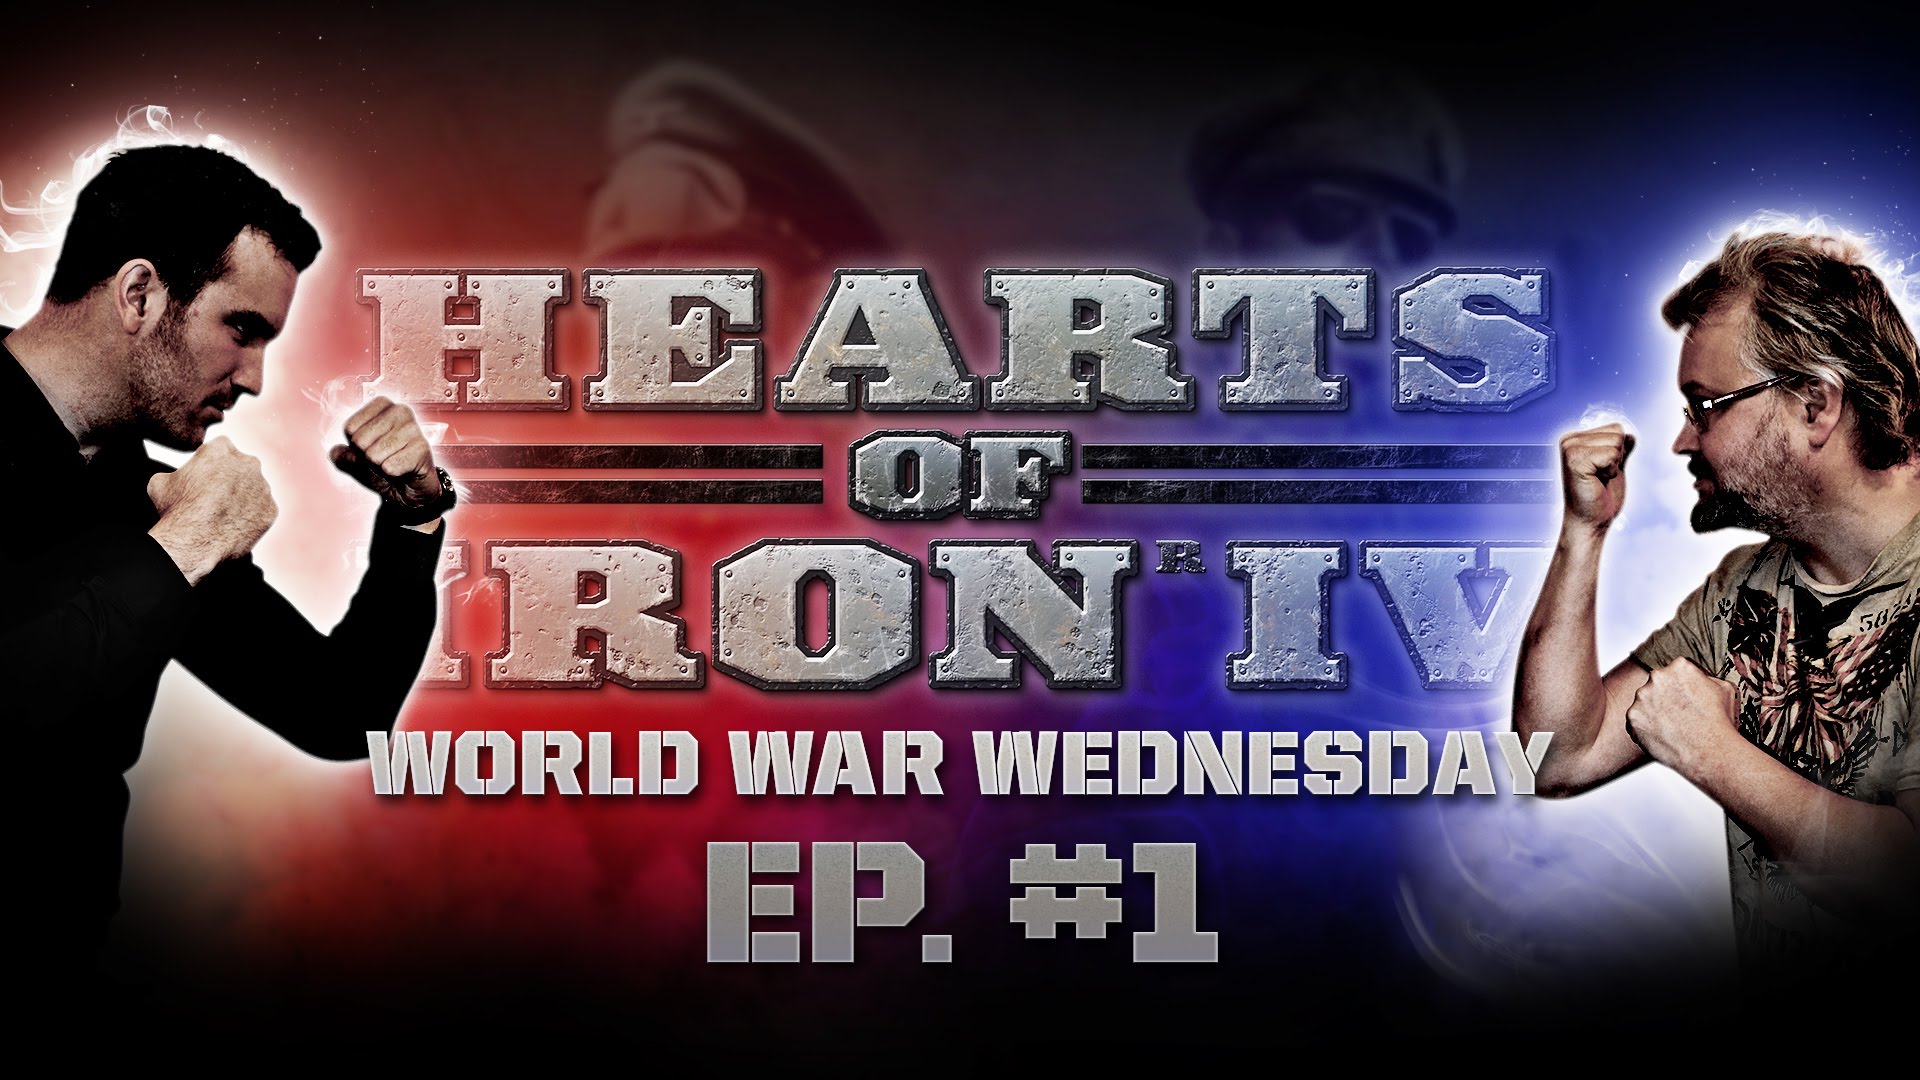 Hearts of Iron IV – “World War Wednesday” Part 1